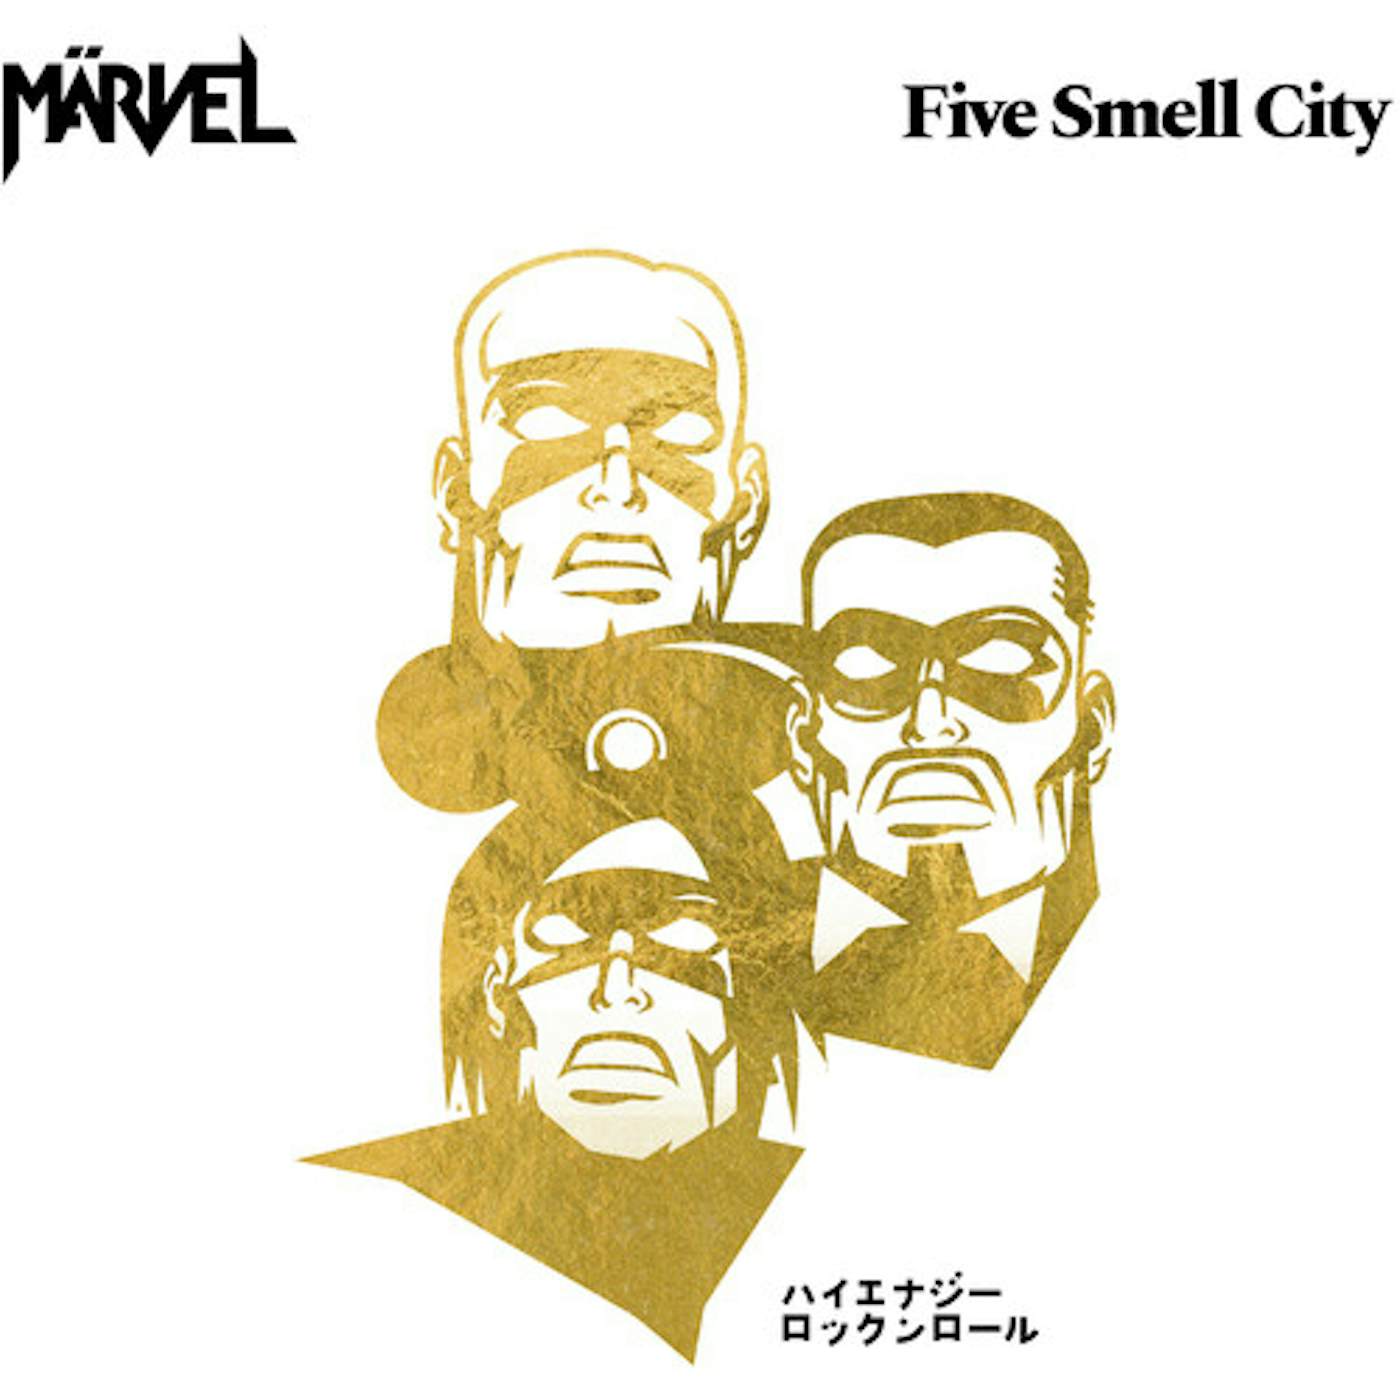 Marvel FIVE SMELL CITY CD